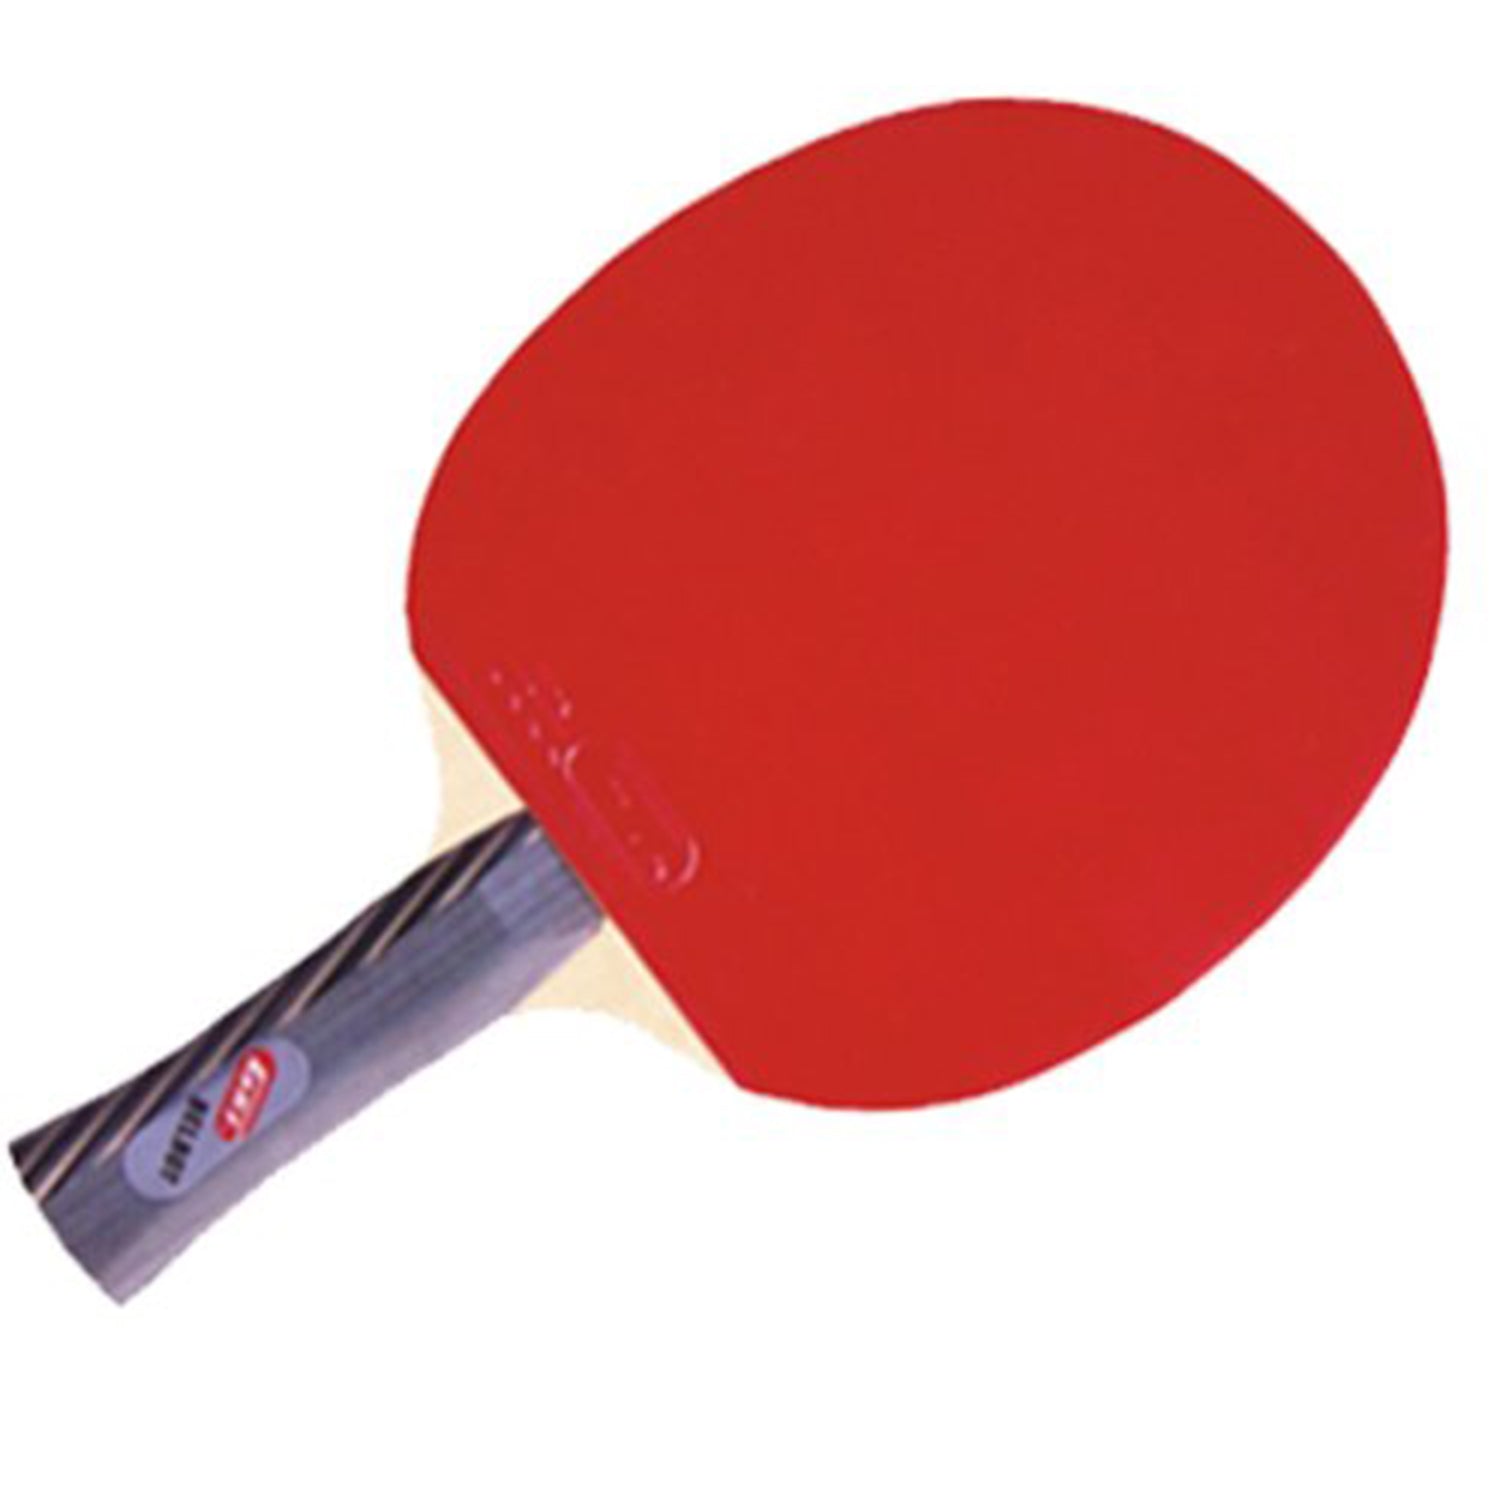 GKI Belbot Table Tennis Racquet - Best Price online Prokicksports.com